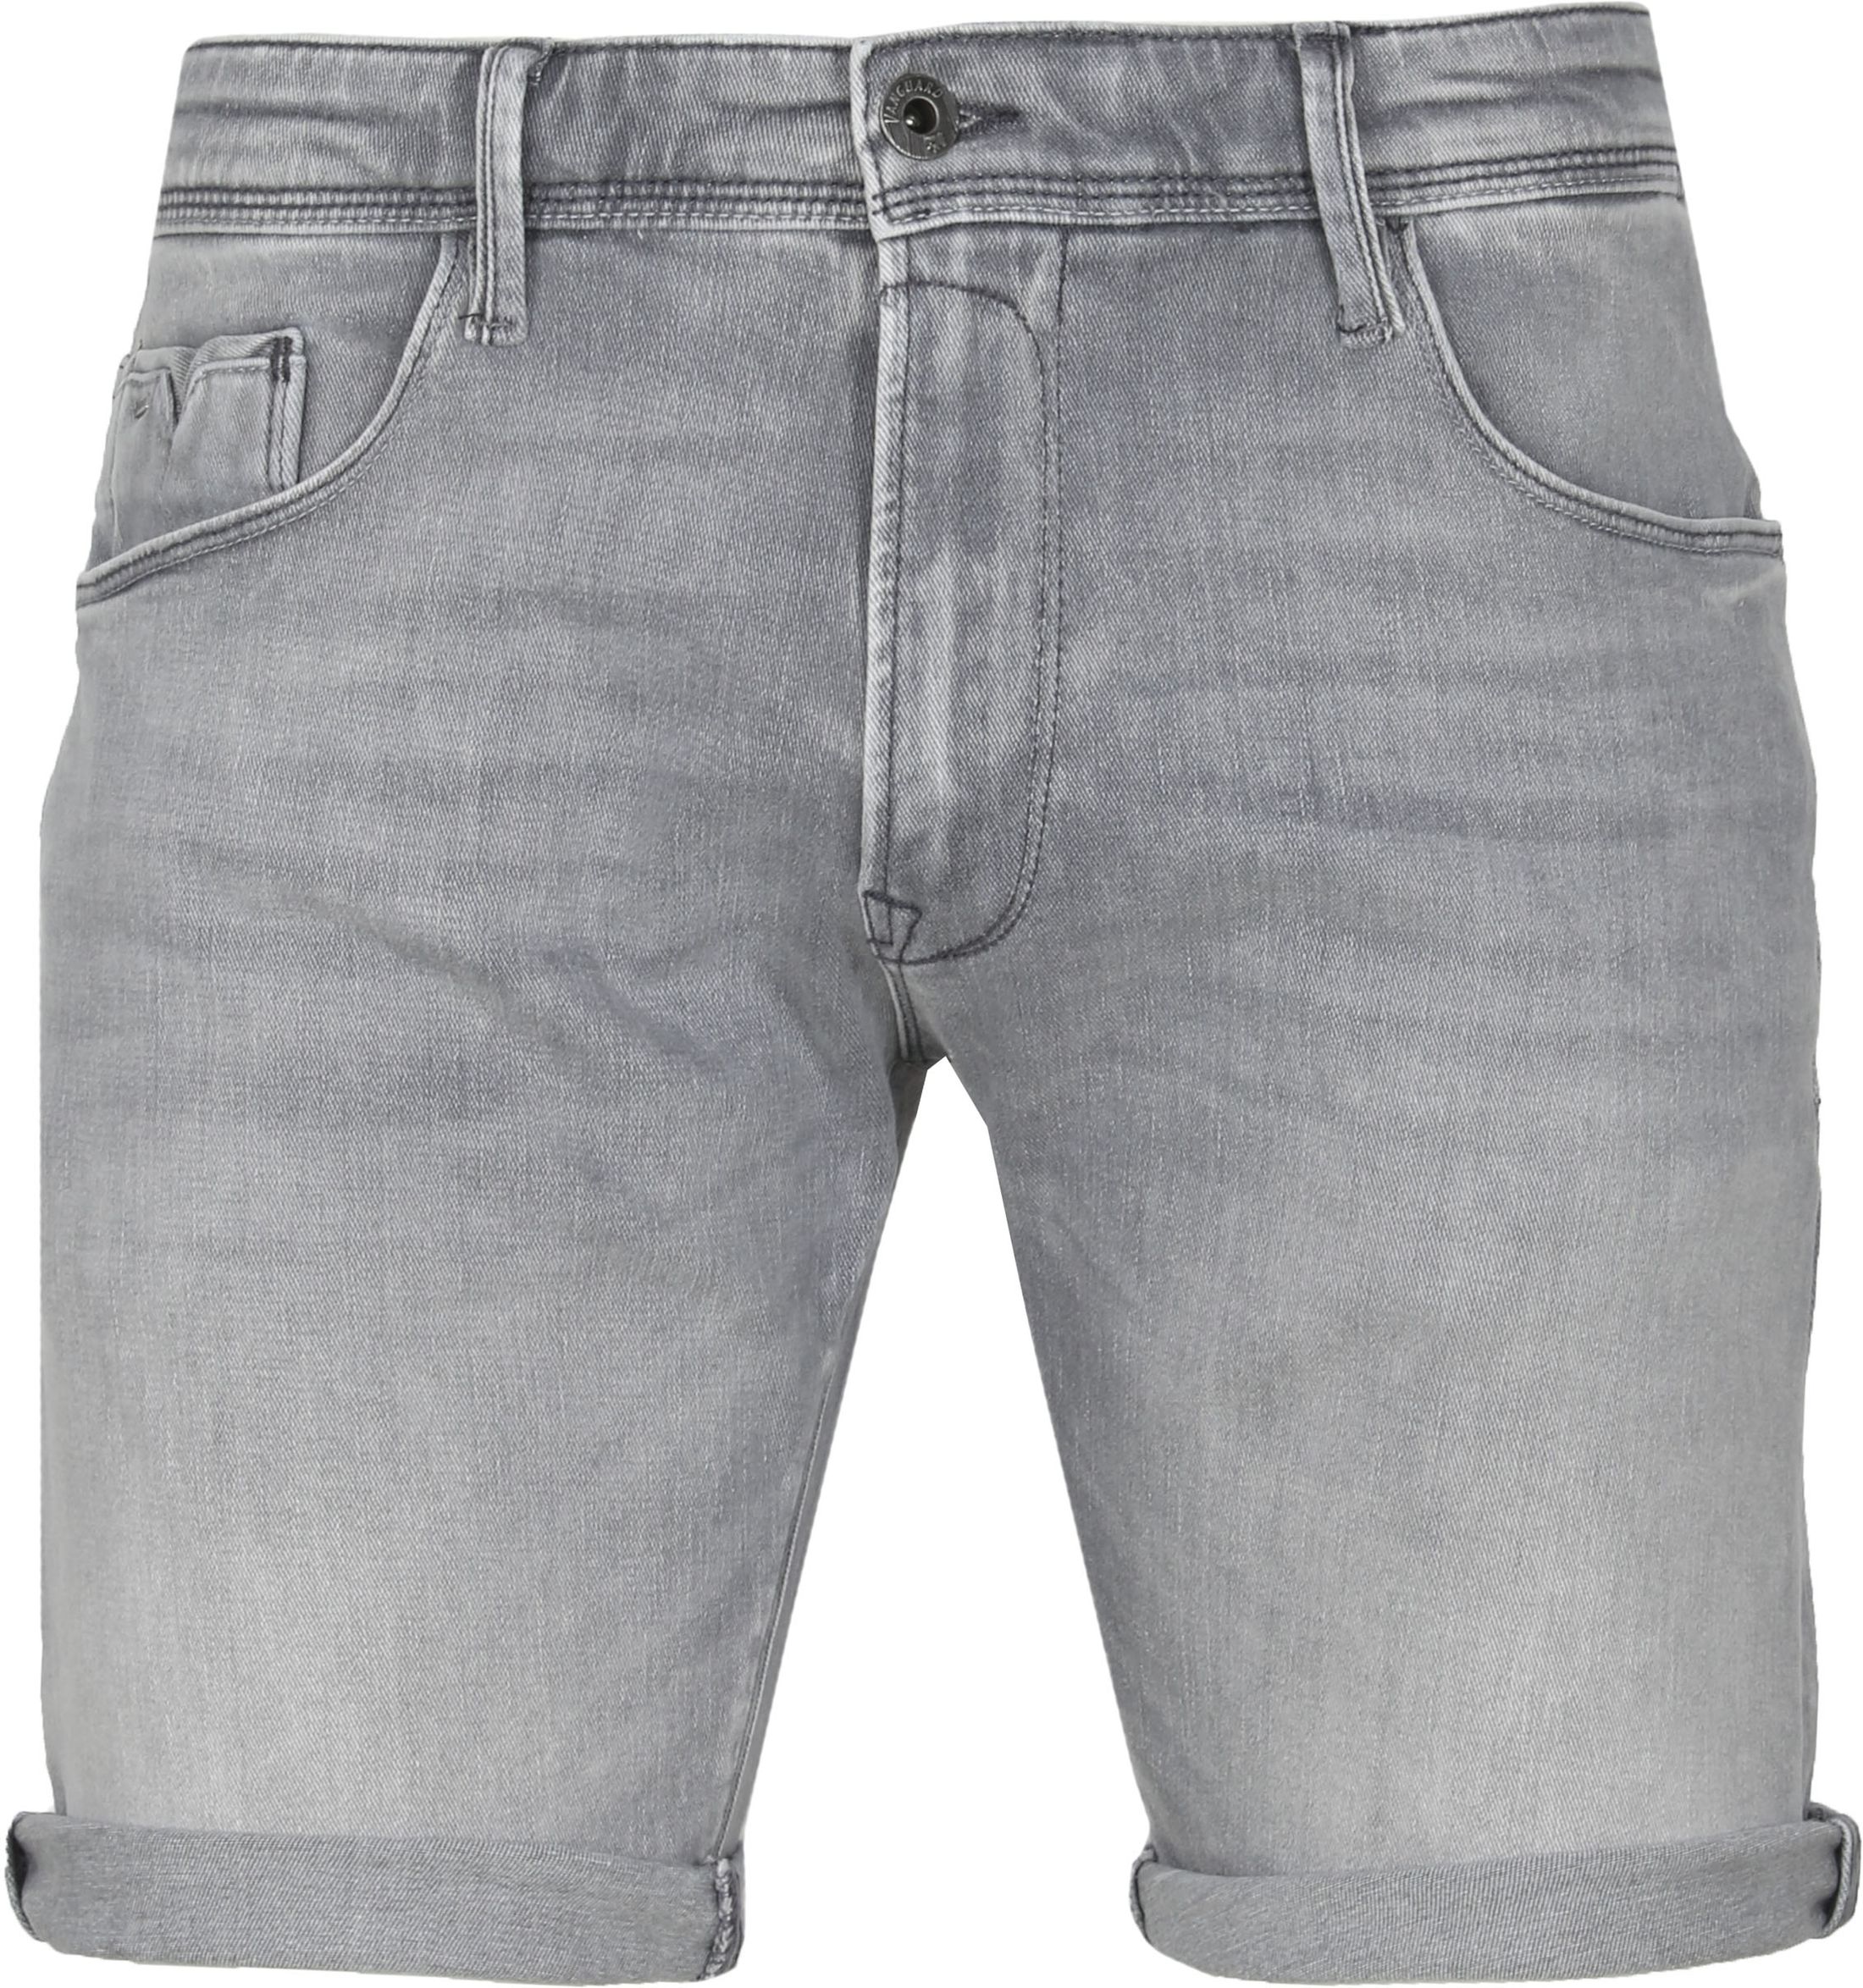 Vanguard V18 Rider Jeans Shorts Grey size 35